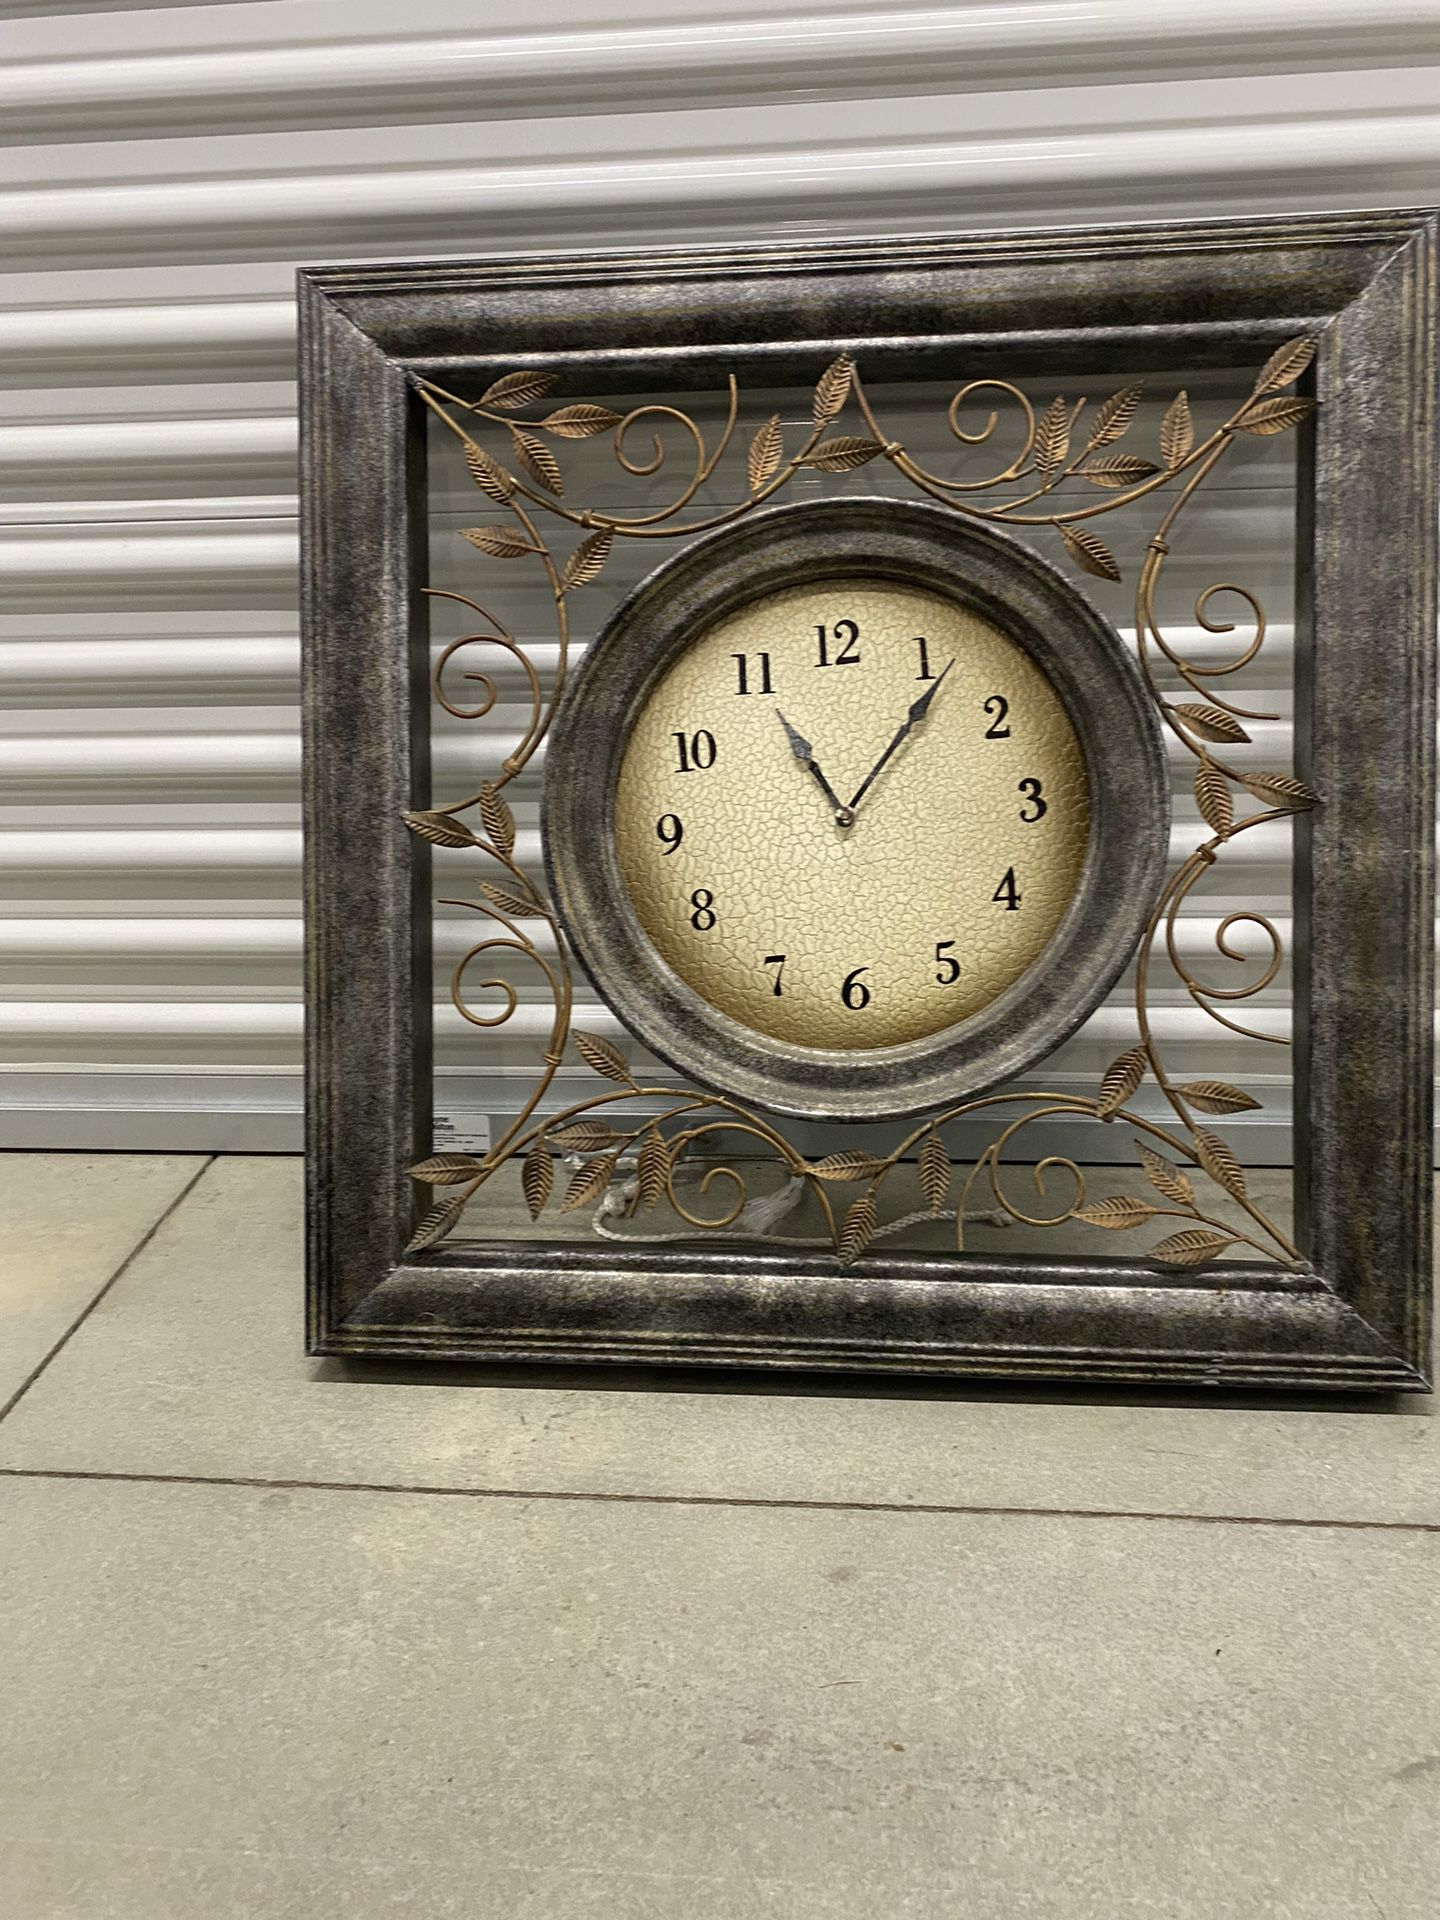 Vintage Metal Wall Clock Decor 